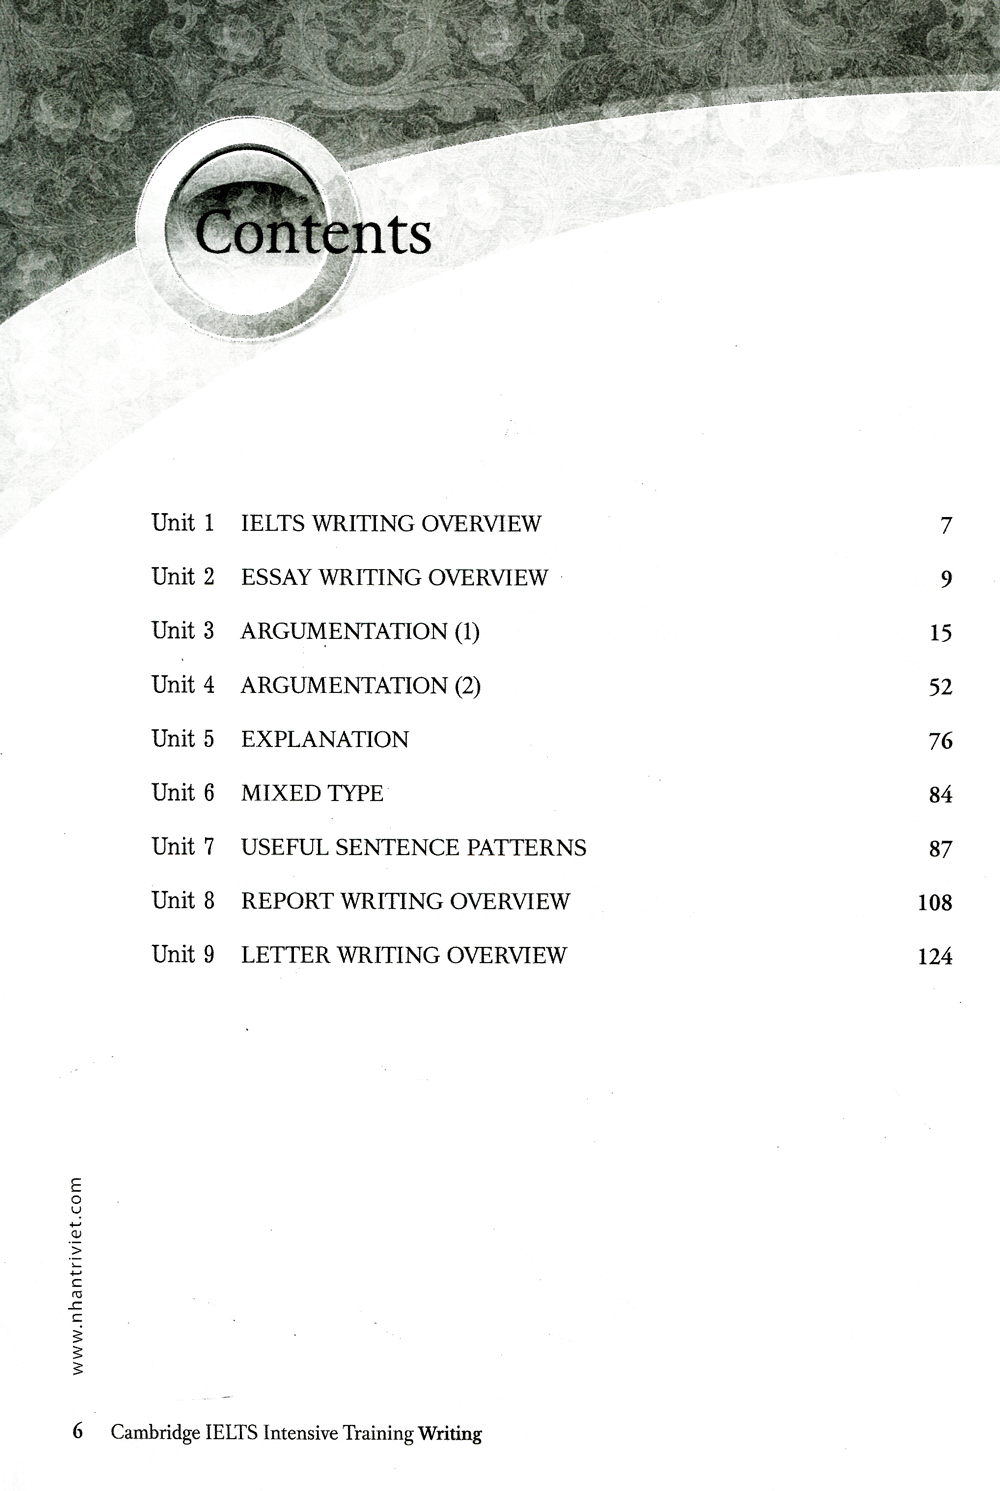 Cambridge Ielts Intensive Training - Writing PDF